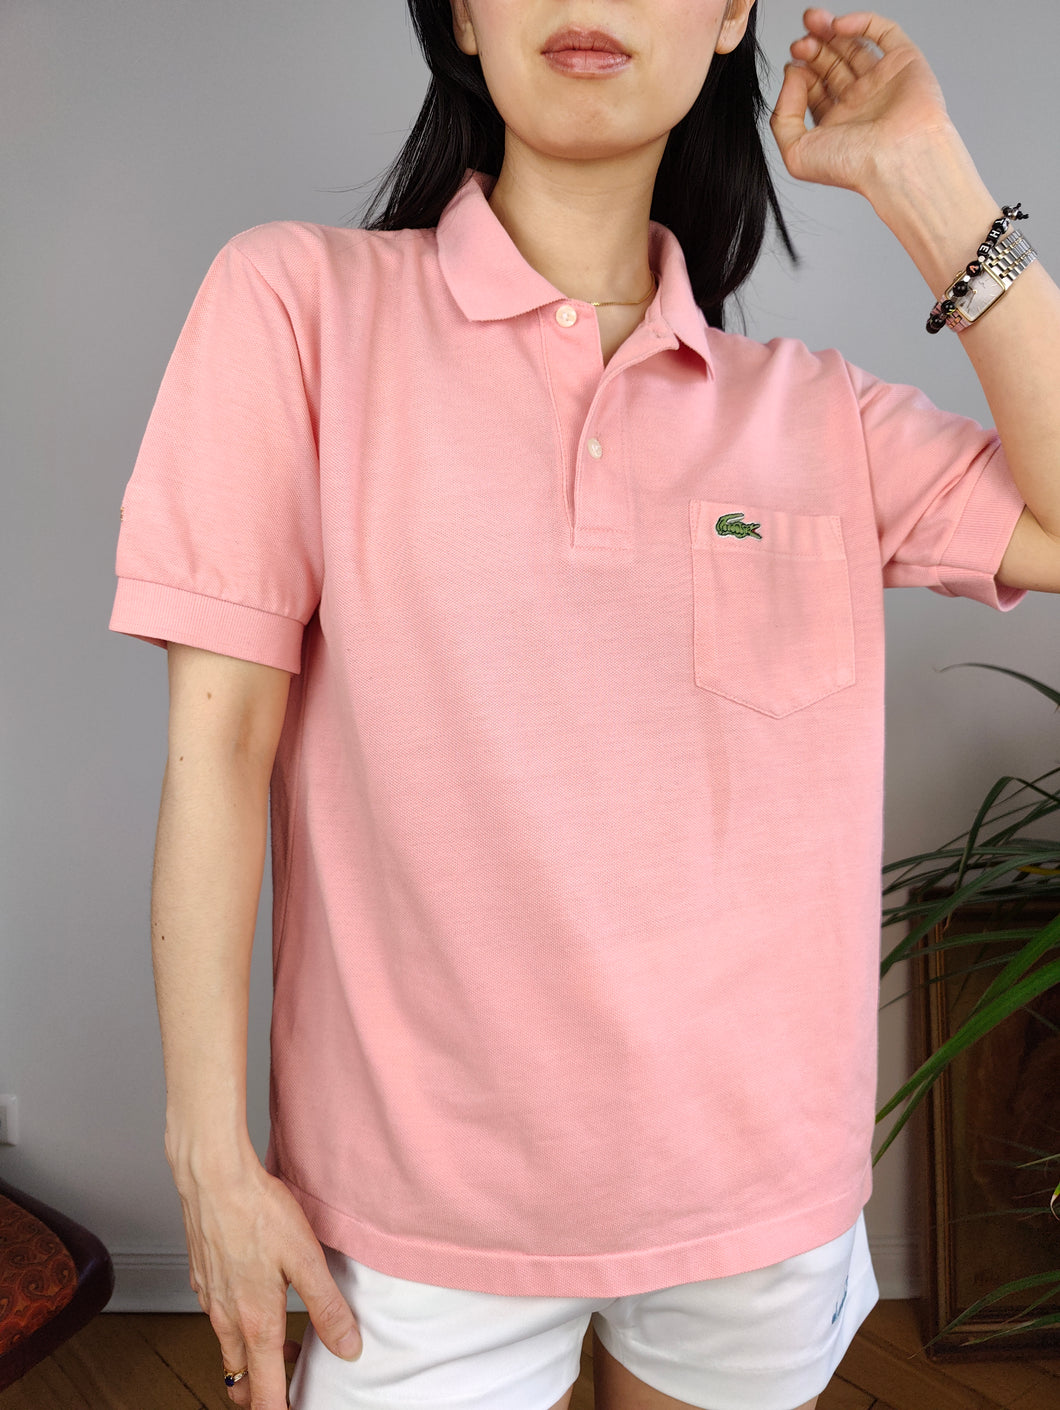 Vintage Lacoste polo shirt cotton pink peach orange short sleeve women S-M